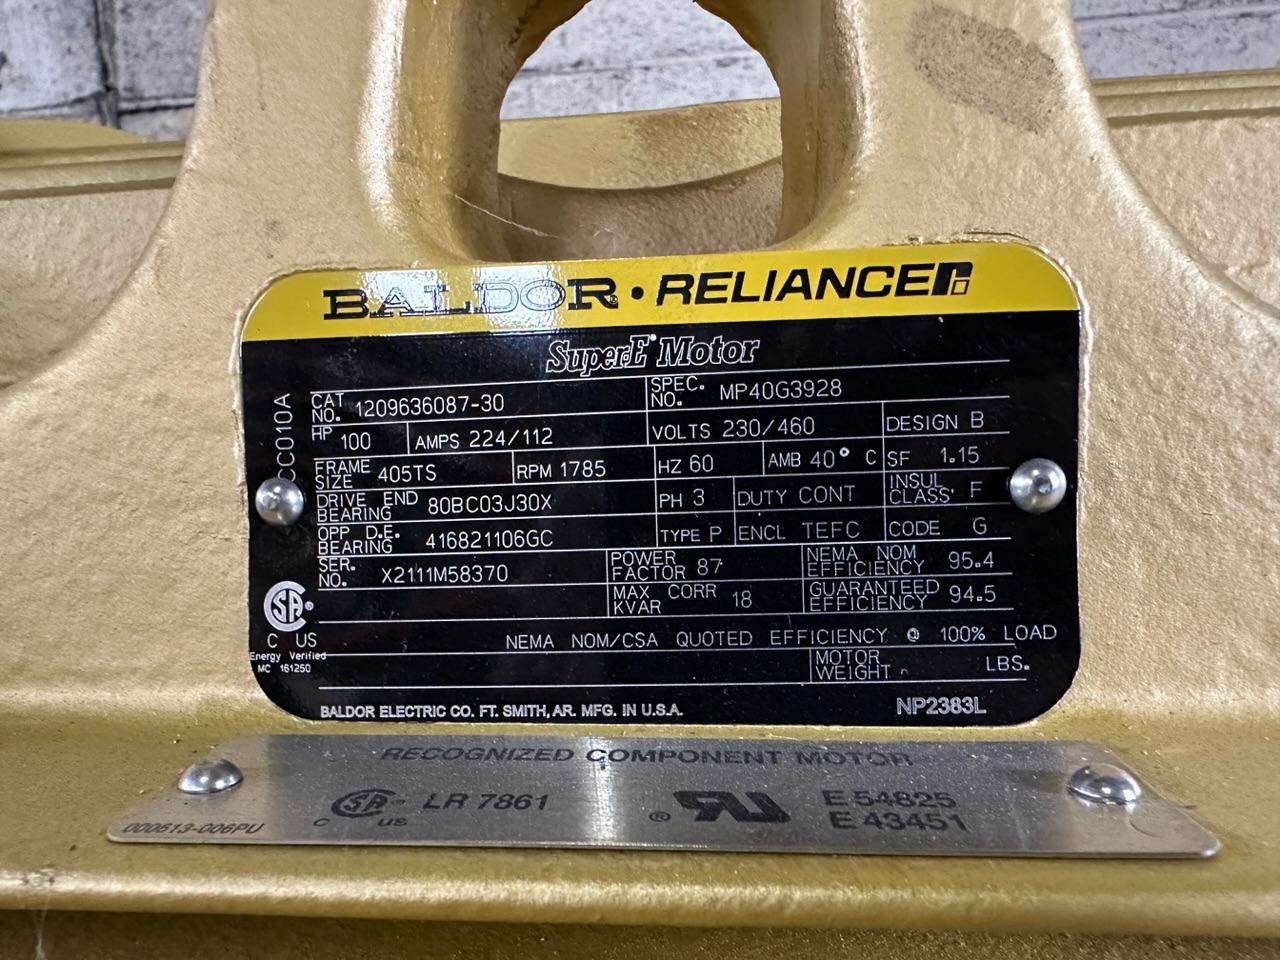 Baldor-Reliance 100 HP 1800 RPM 405TS Squirrel Cage Motors 89160